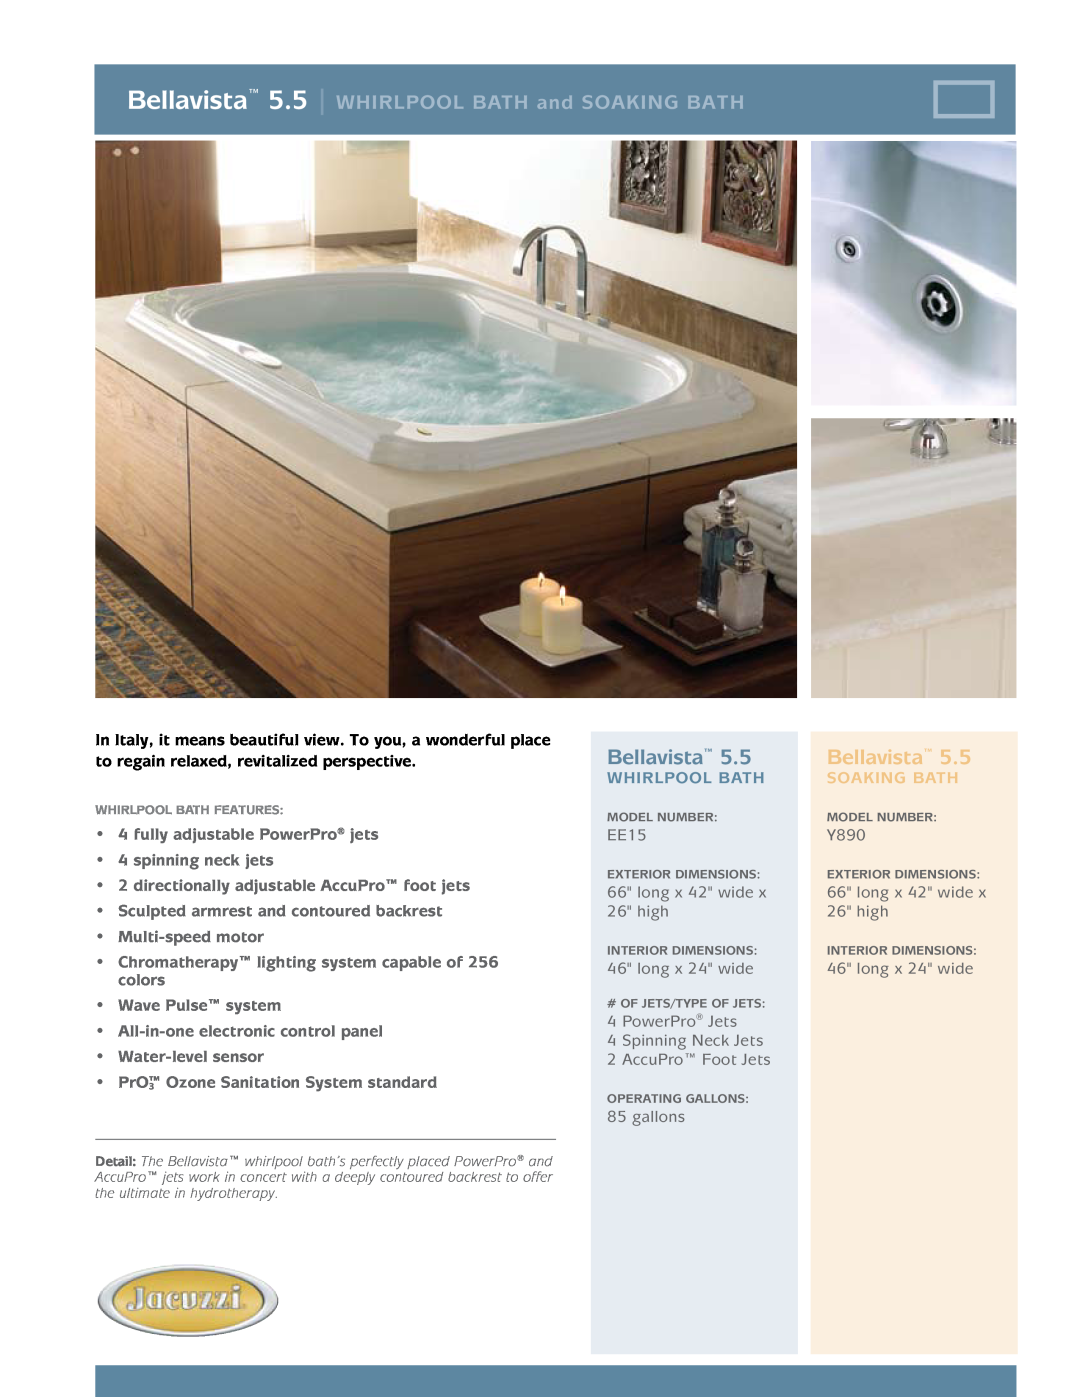 Jacuzzi EE15, Y890 dimensions Bellavista 5.5 whirlpool bath and soaking Bath, Whirlpool Bath, Soaking Bath 